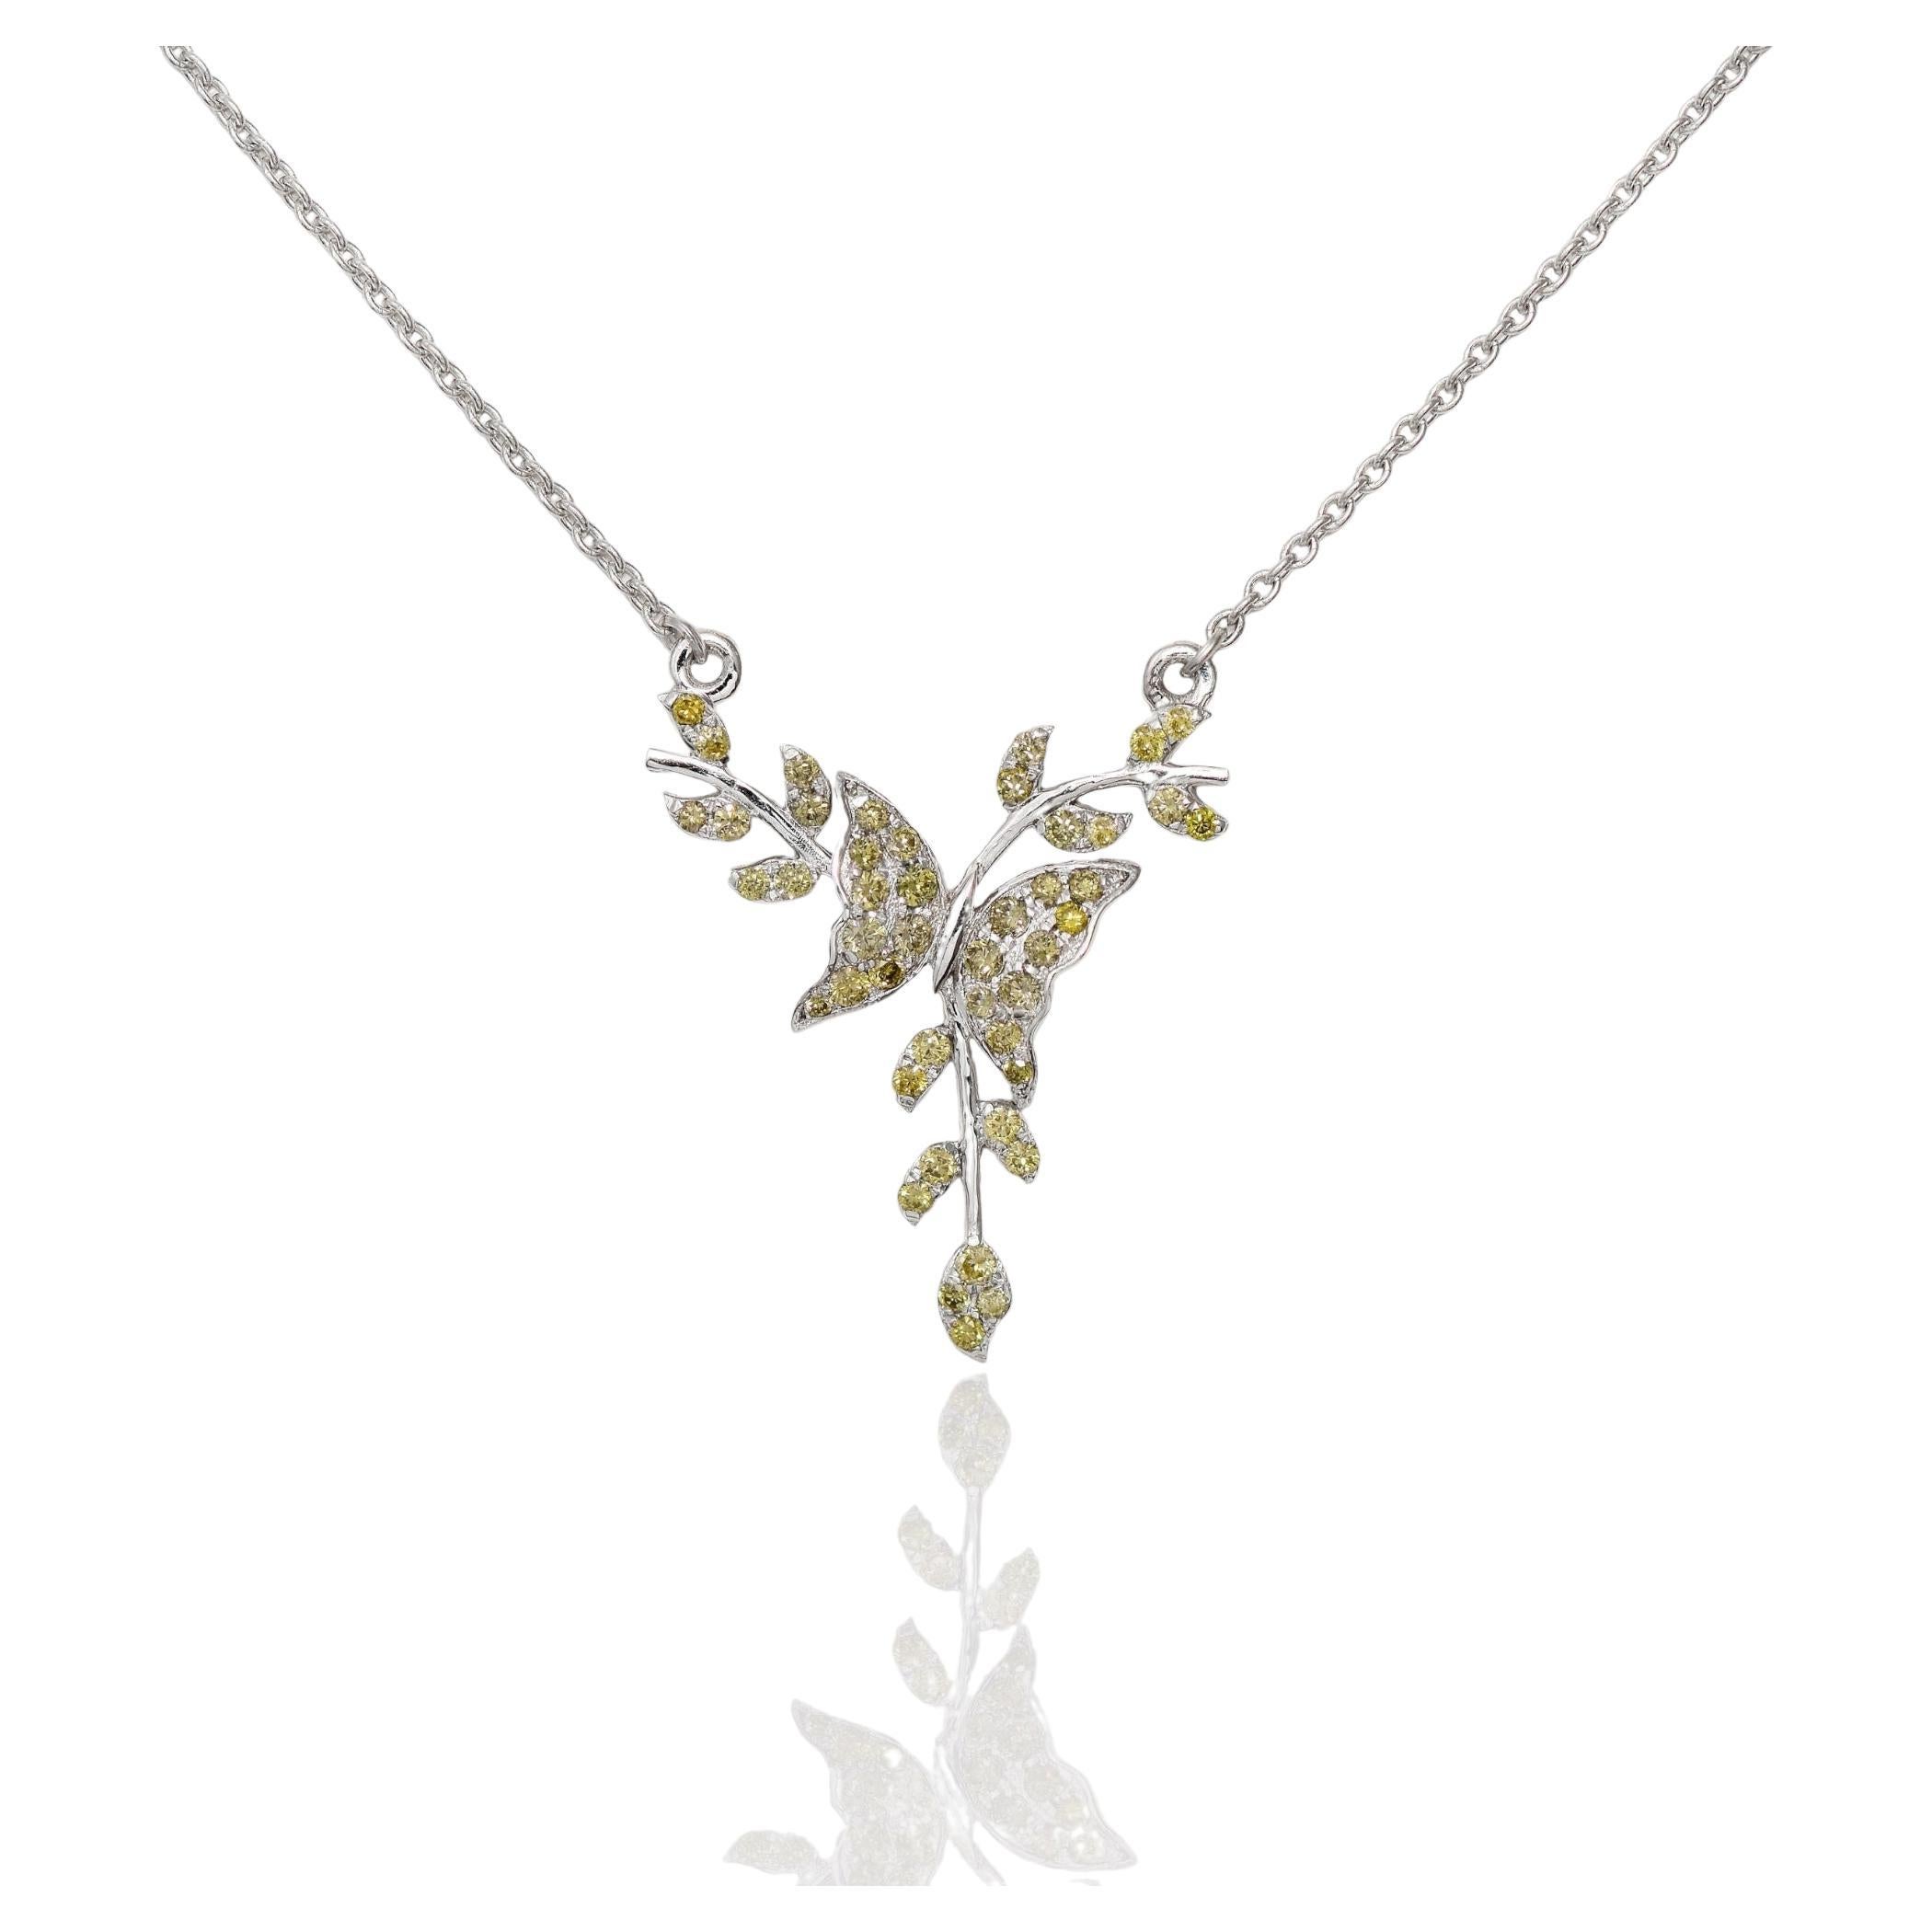 IGI 14K 0.25 ct Natural Greenish Yellow Diamonds Branches Design Necklace